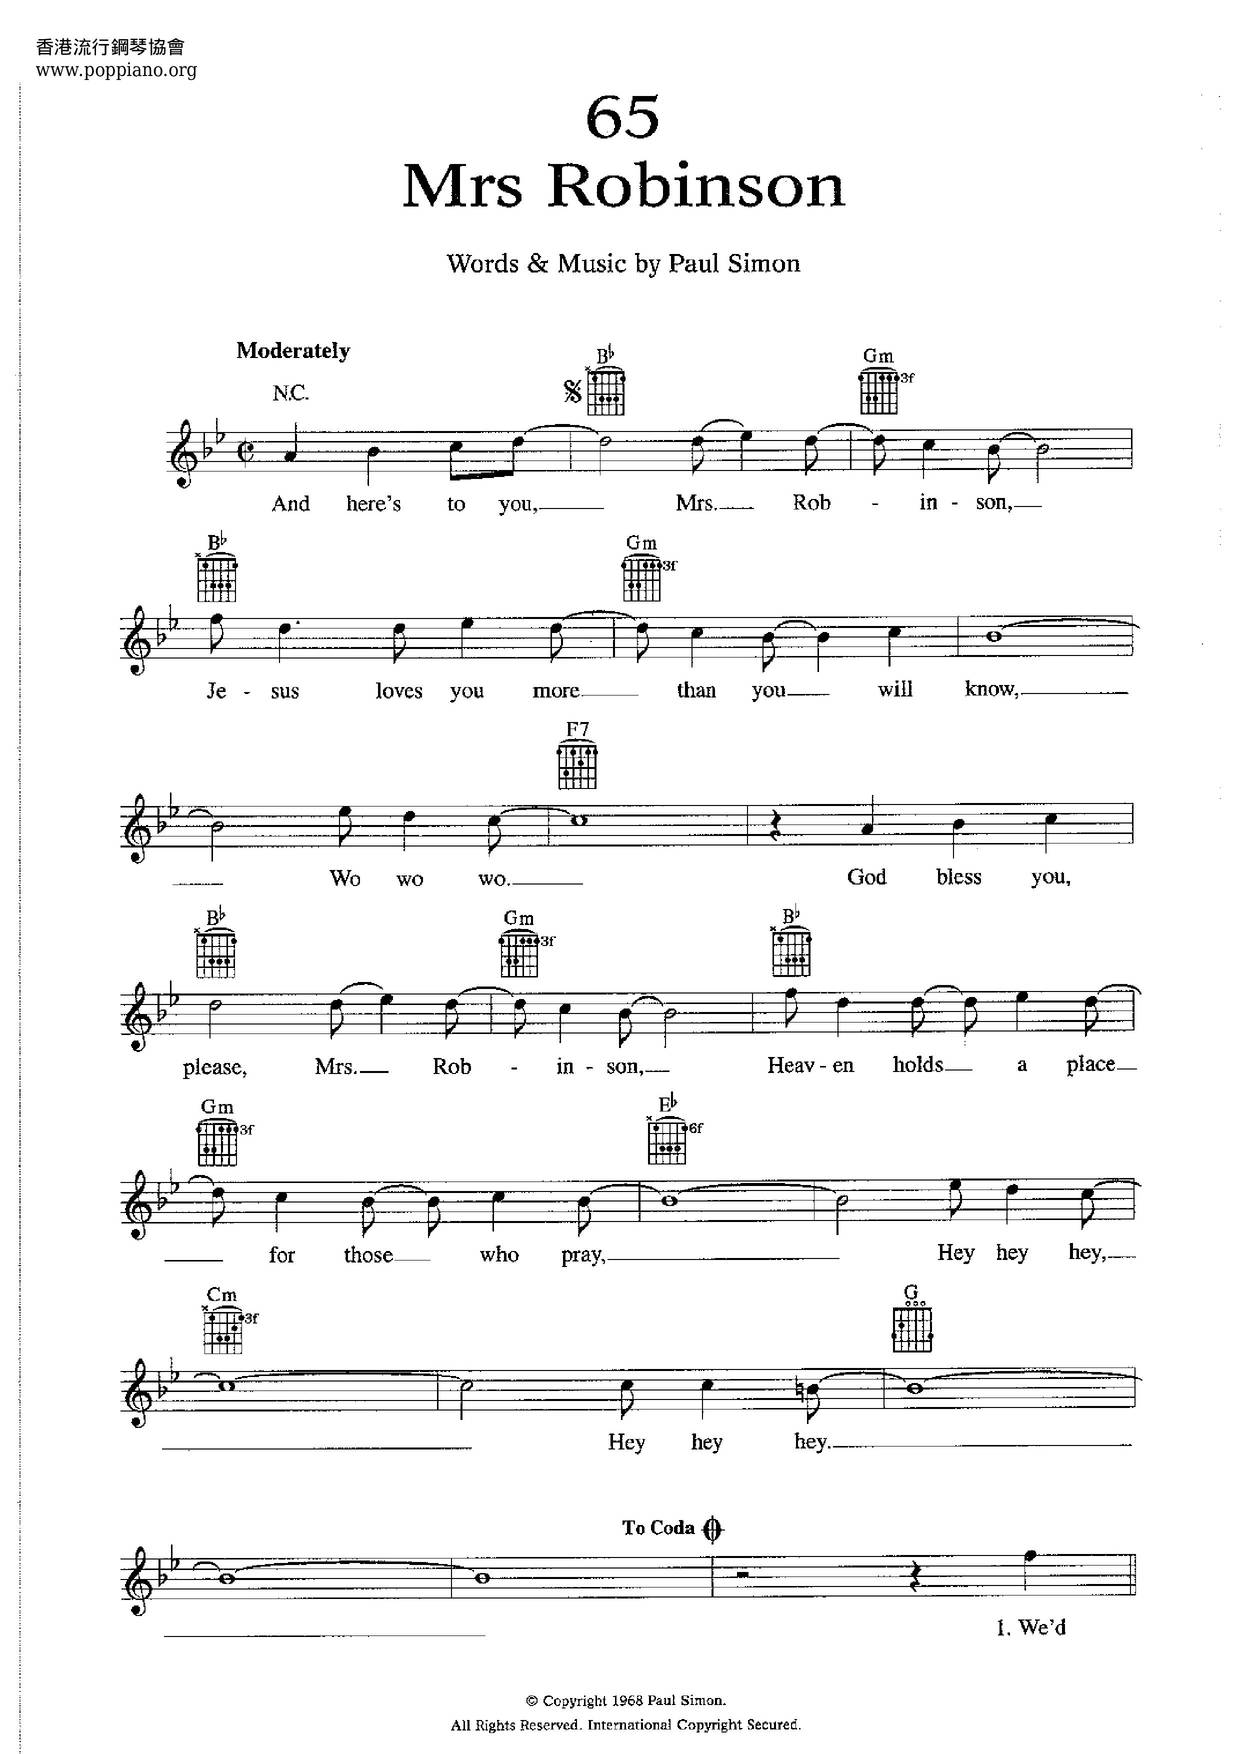 Mrs. Robinson - From The Graduate Soundtrack Score